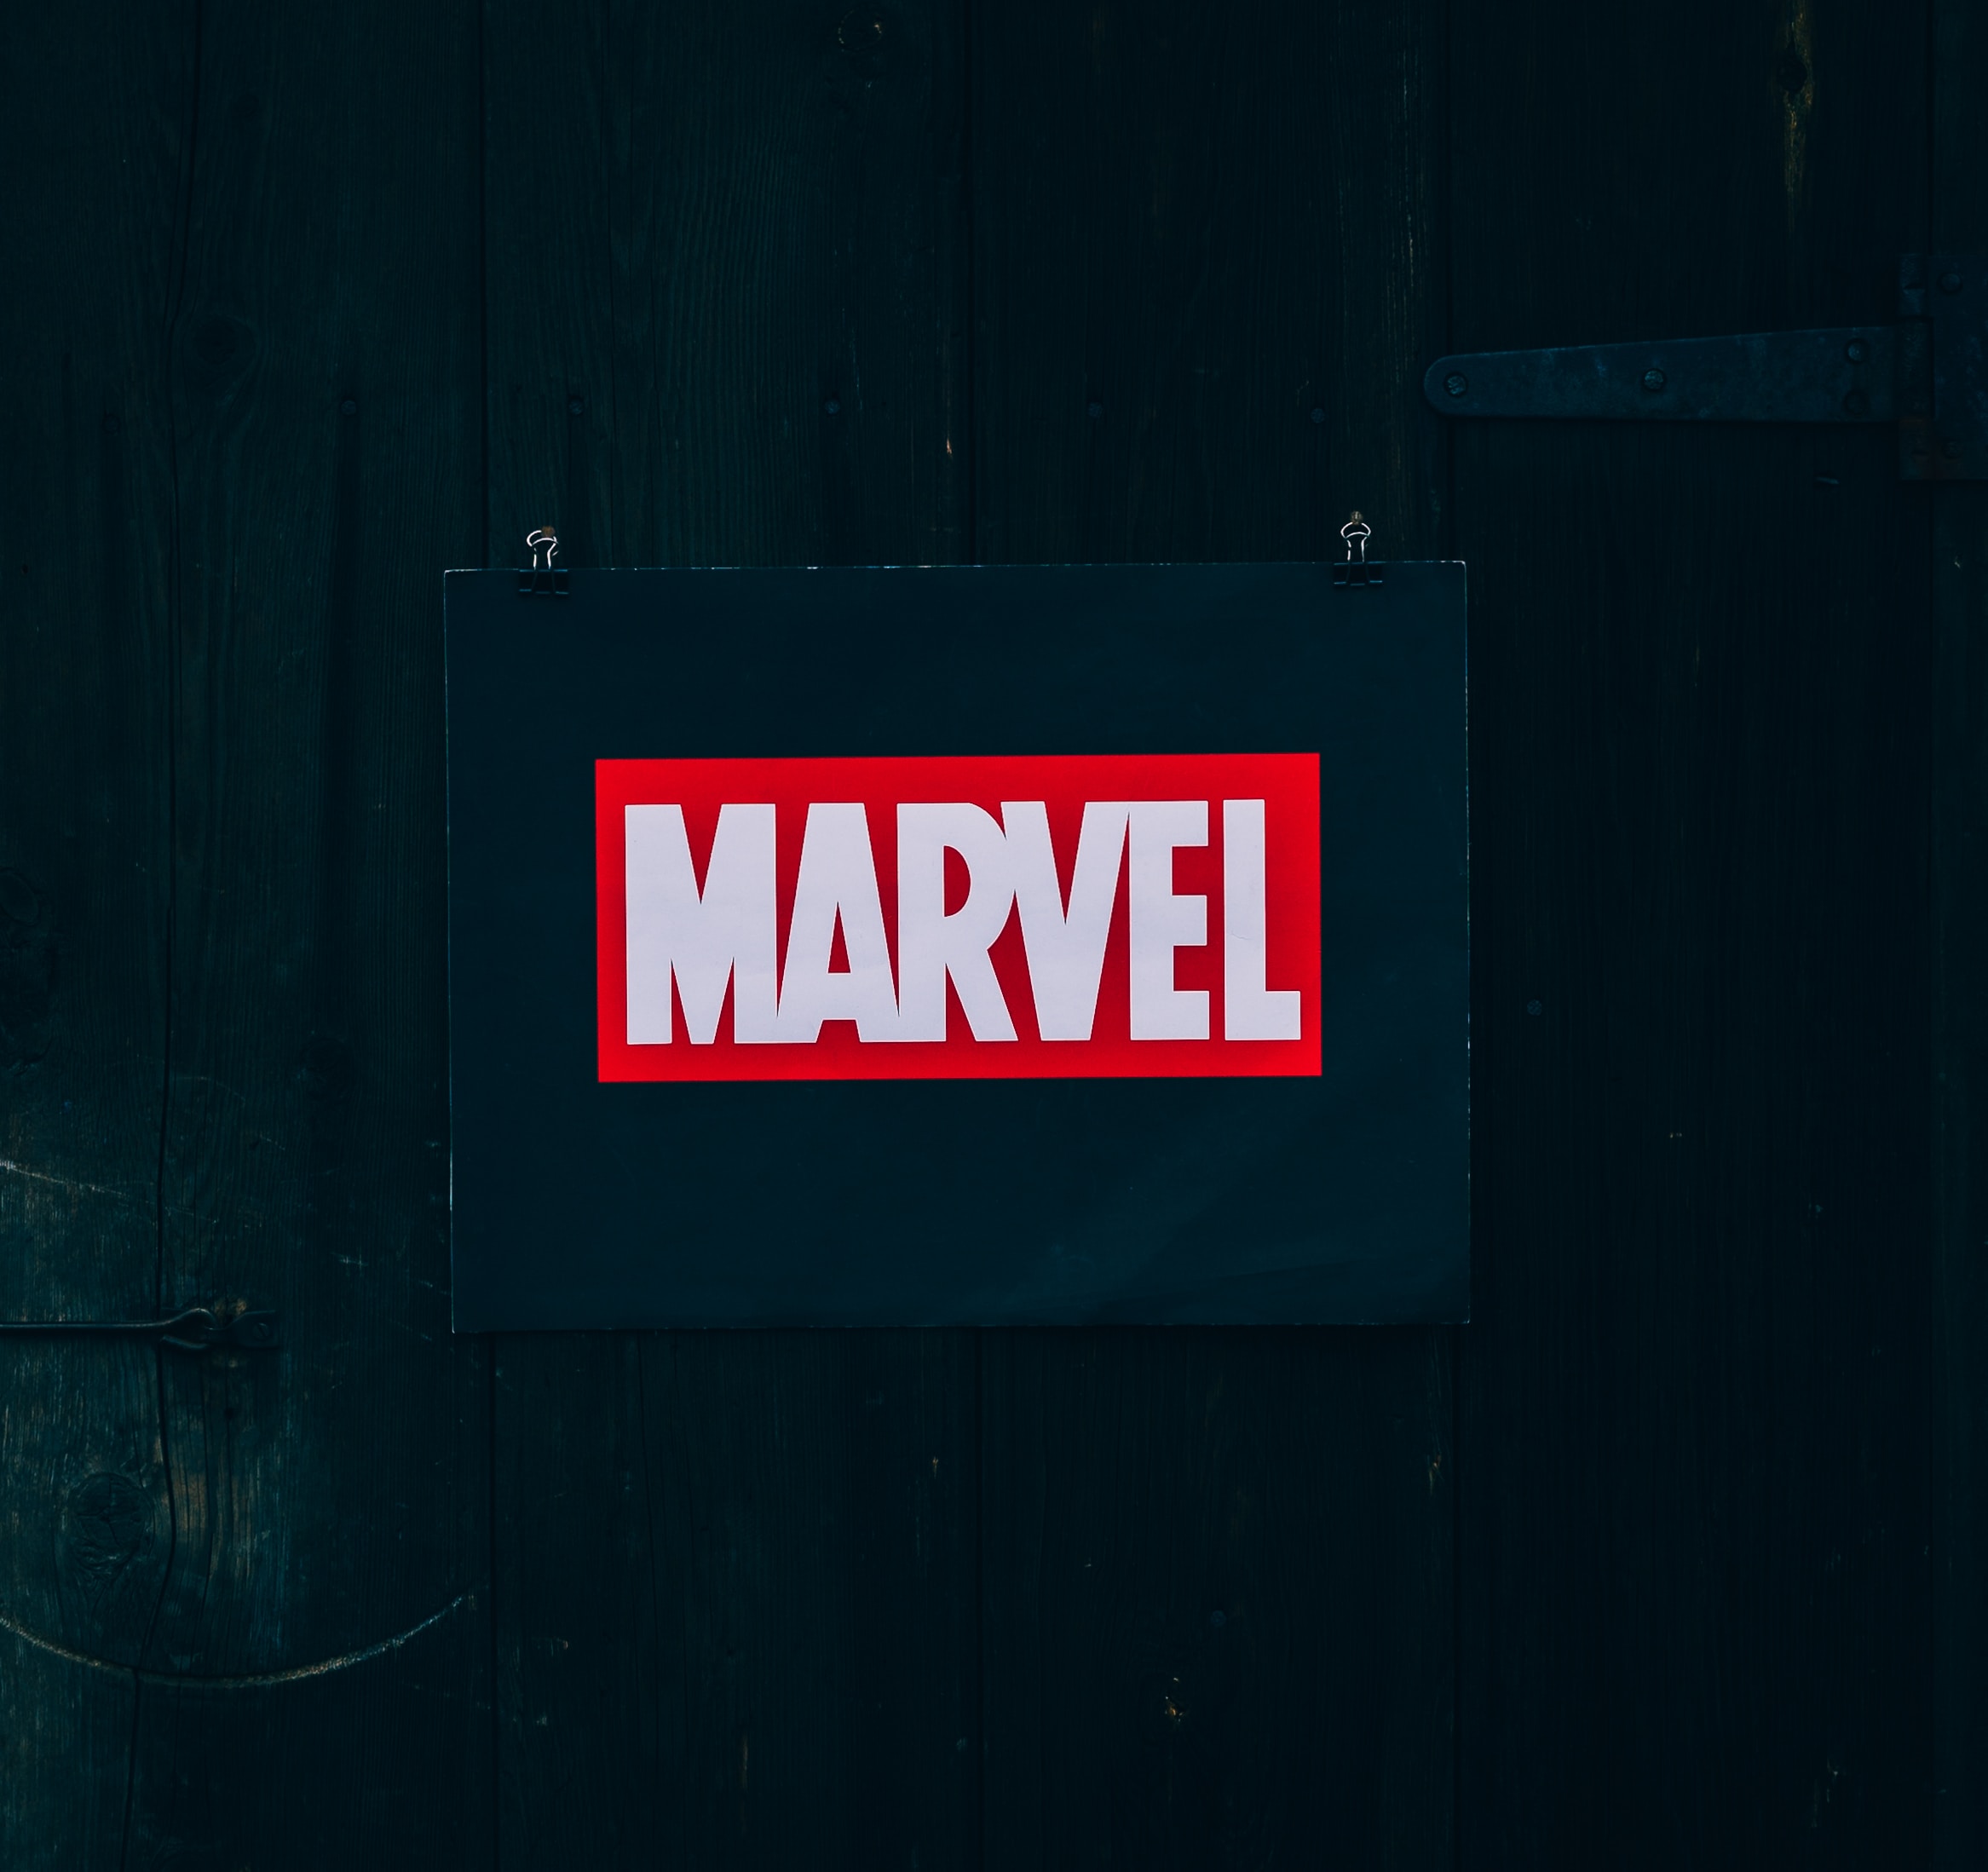 Marvel Logo Photo by Elijah O'Donnell on Unsplash